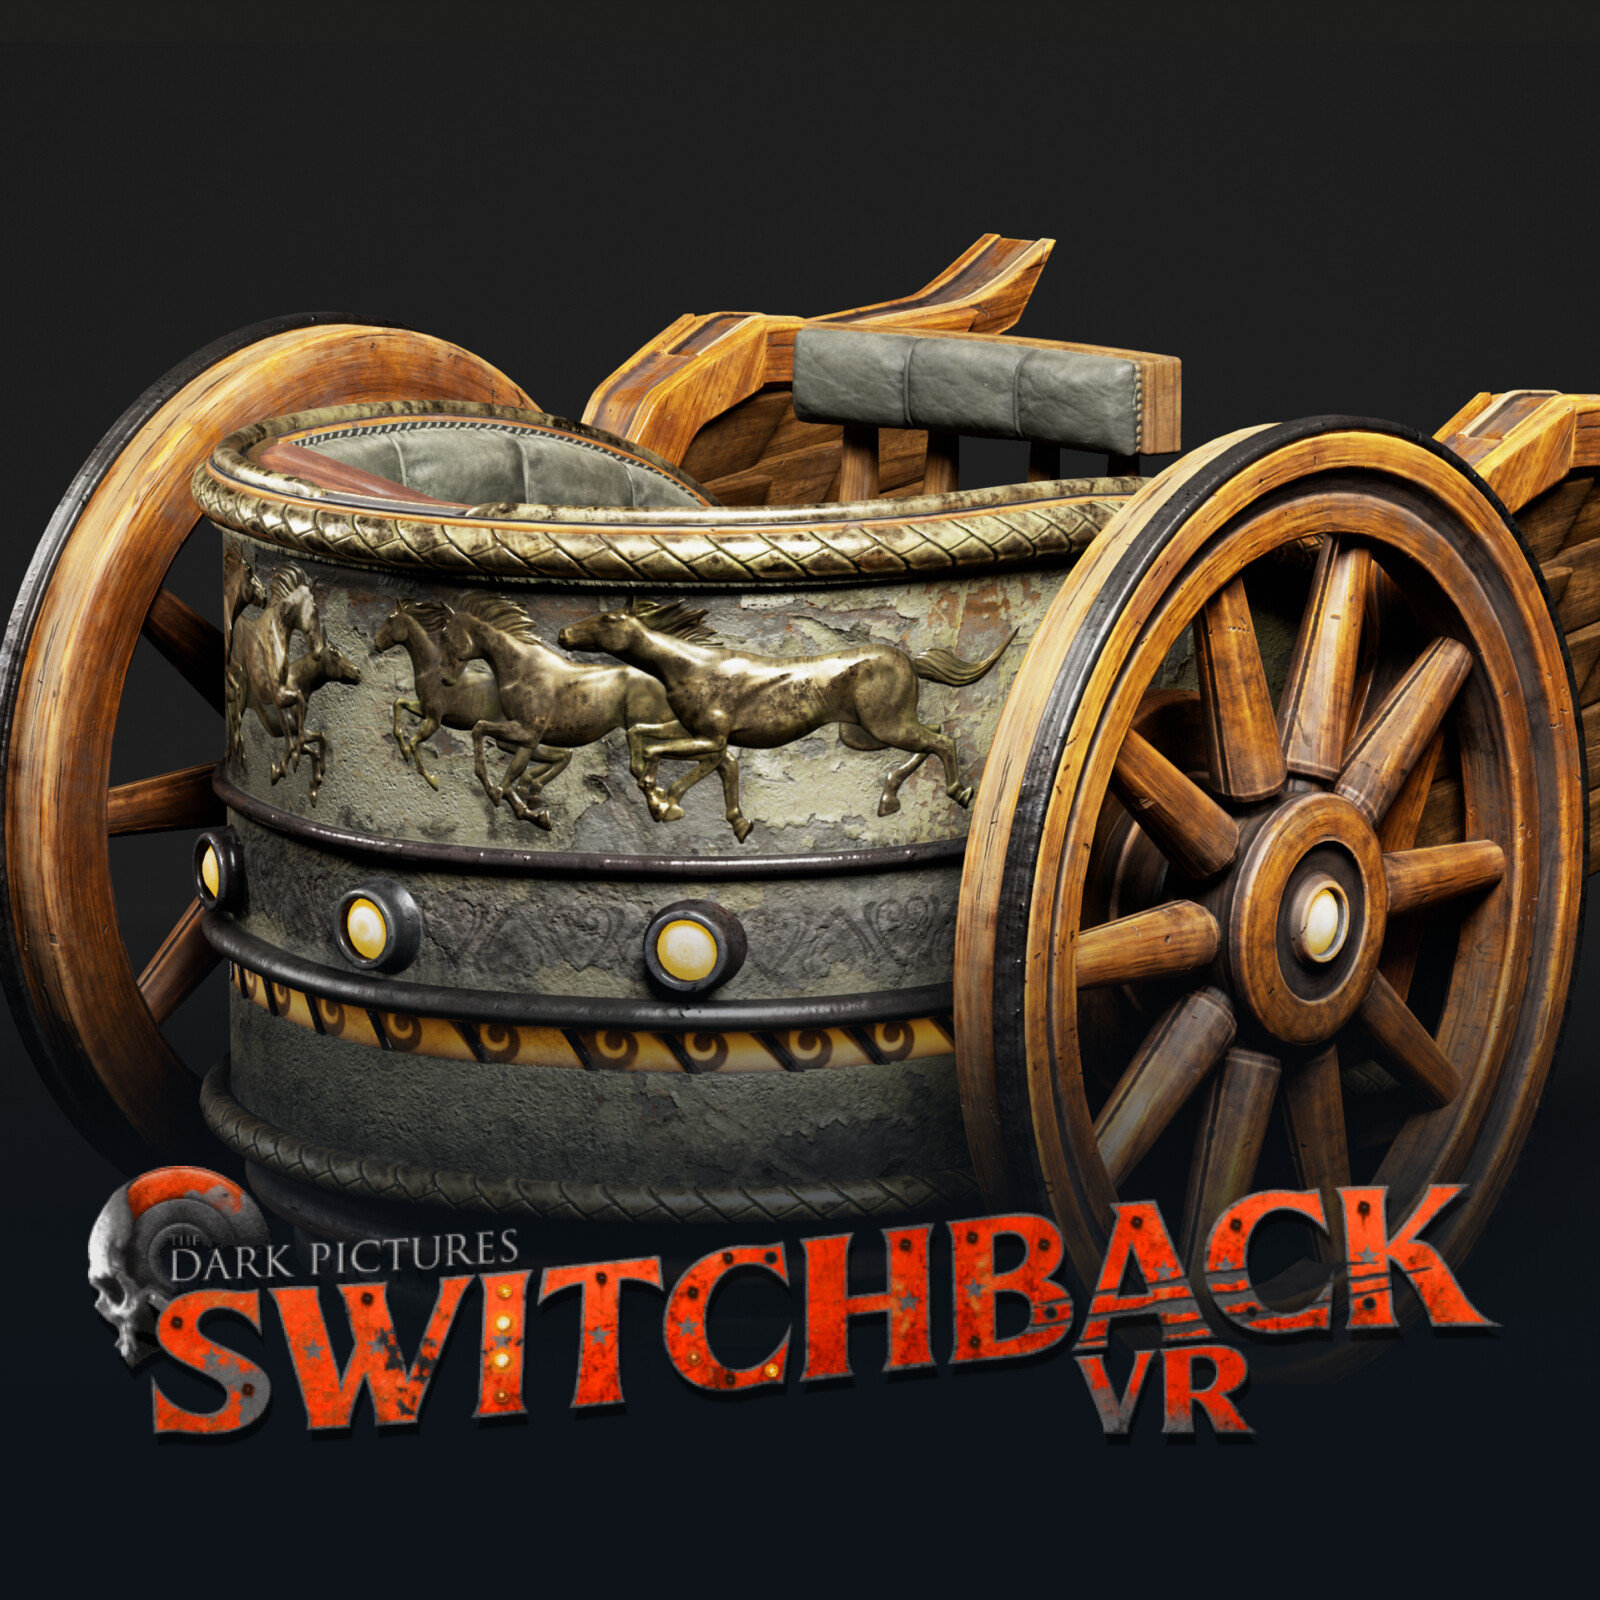 Switchback VR - Cart